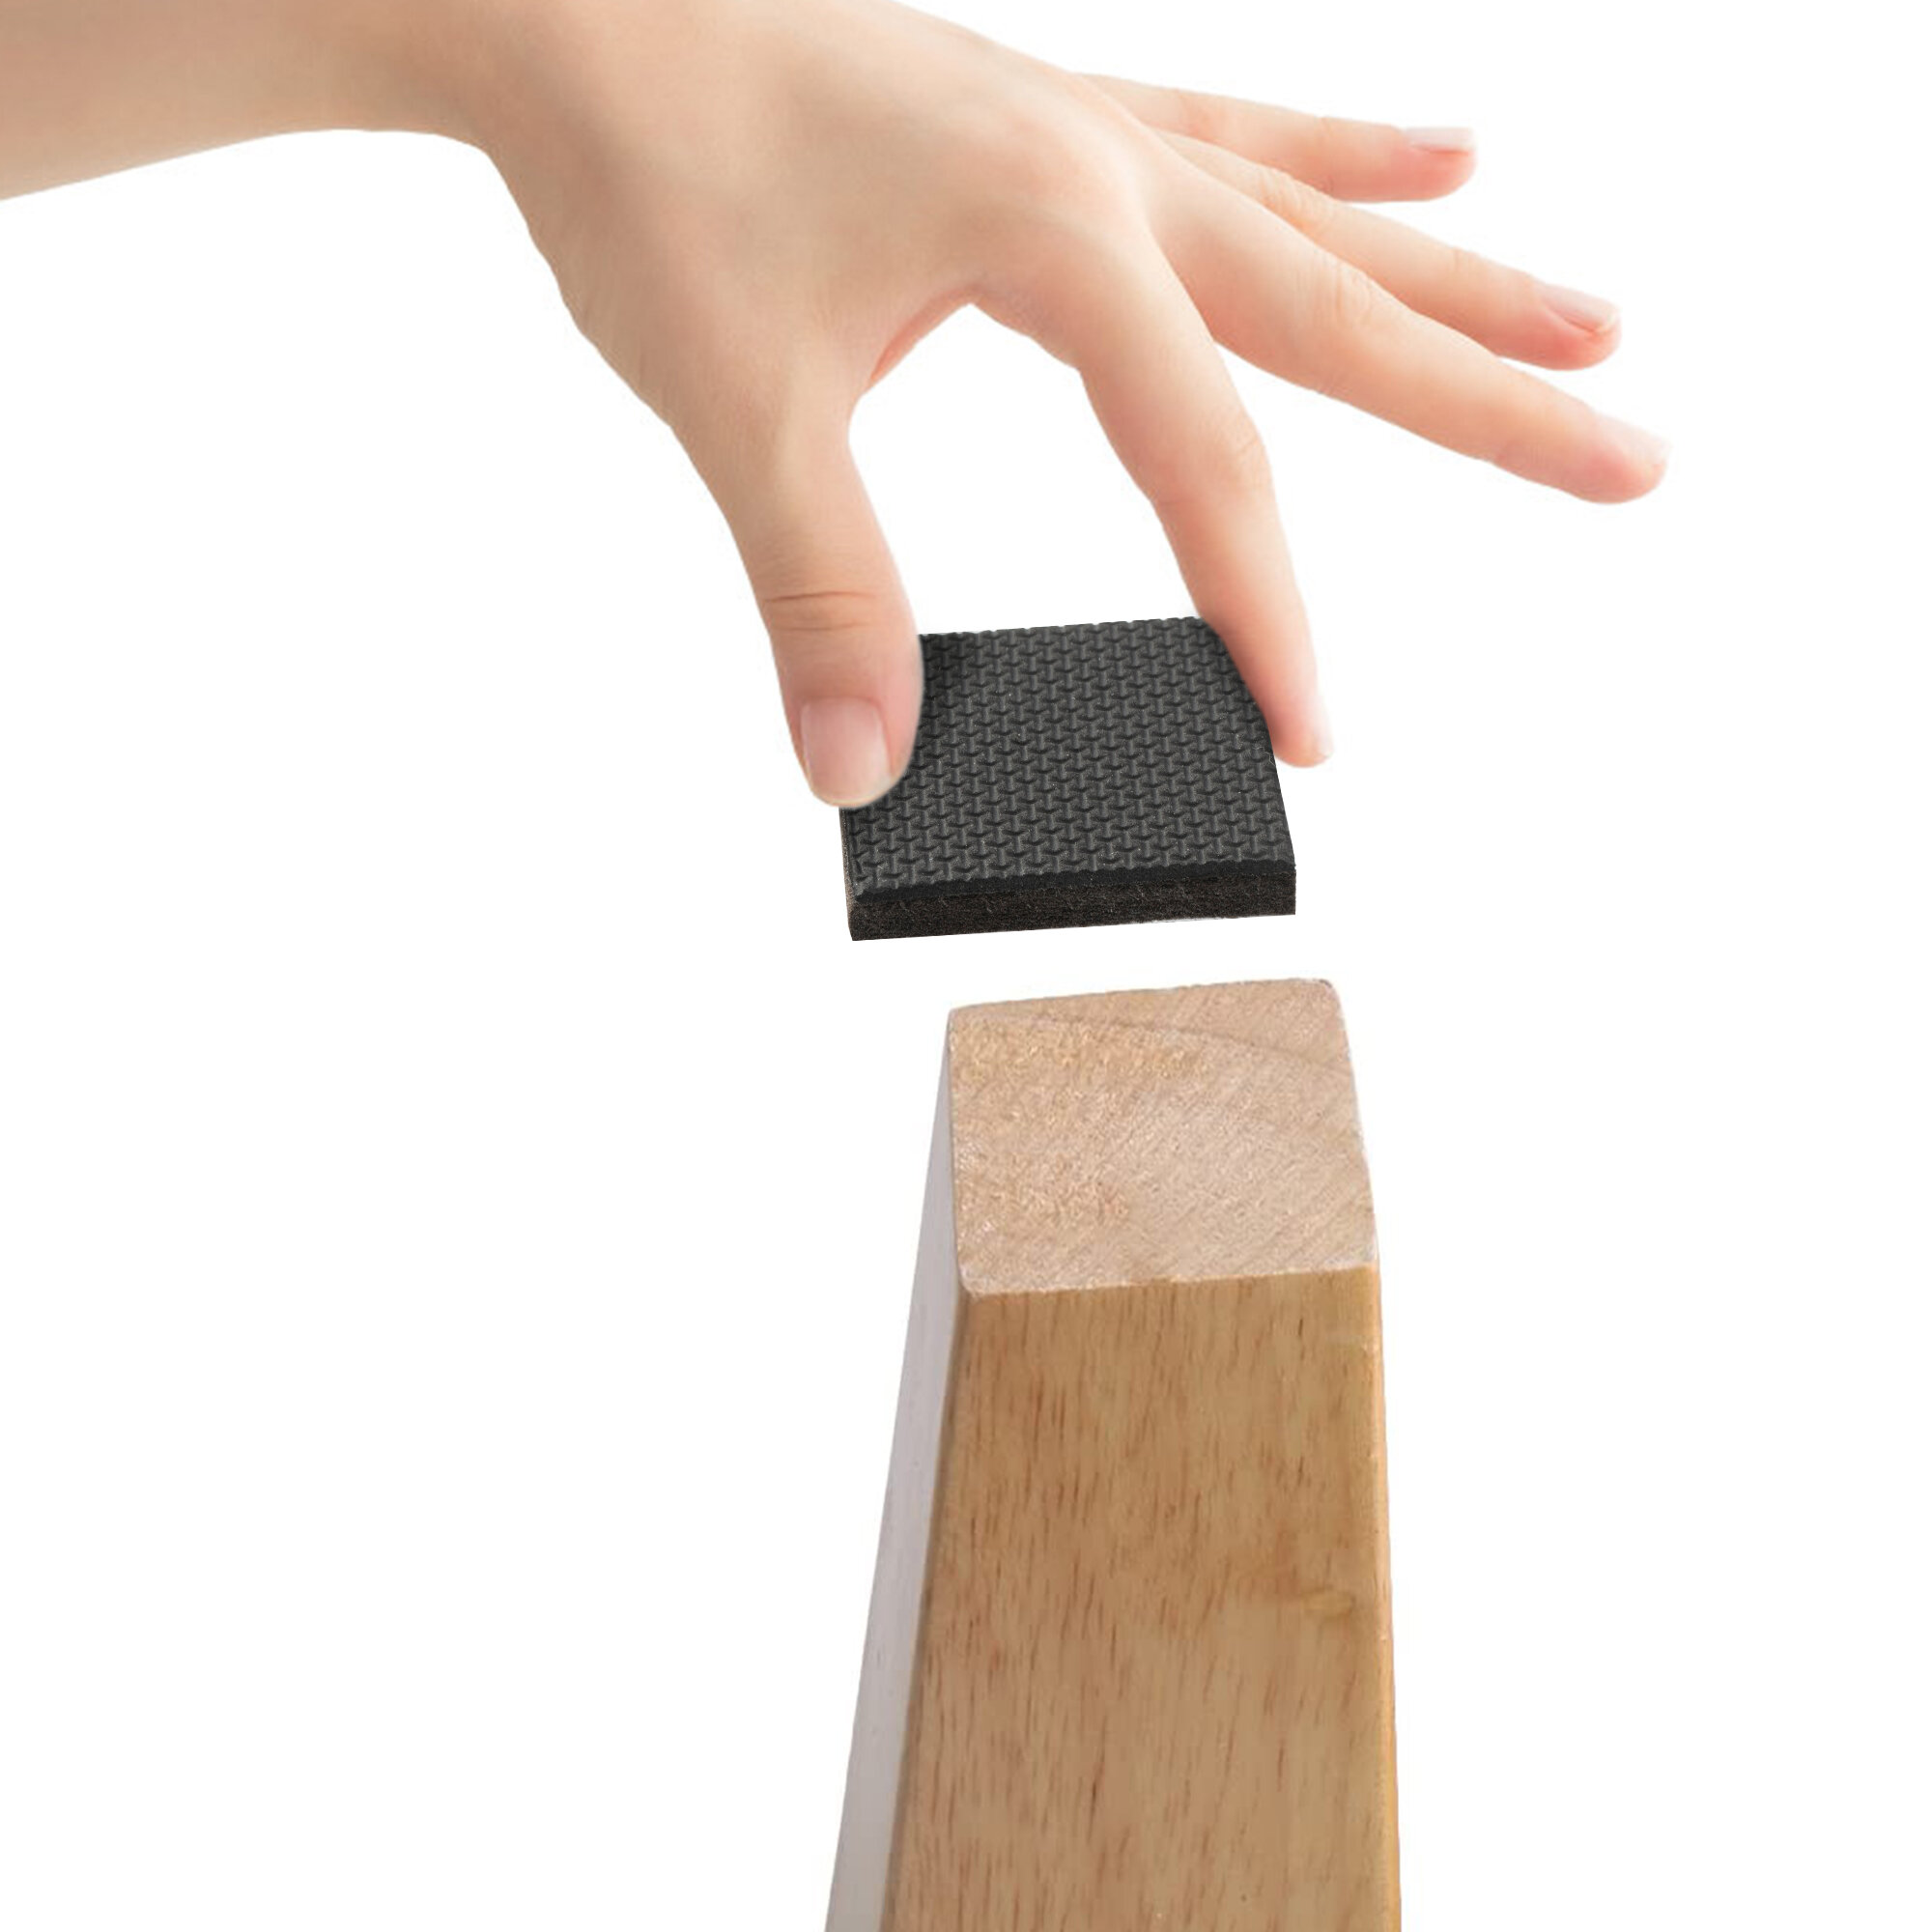 VIKEMIA Furniture Pads, Anti Slip Rubber Pads Self Adhesive